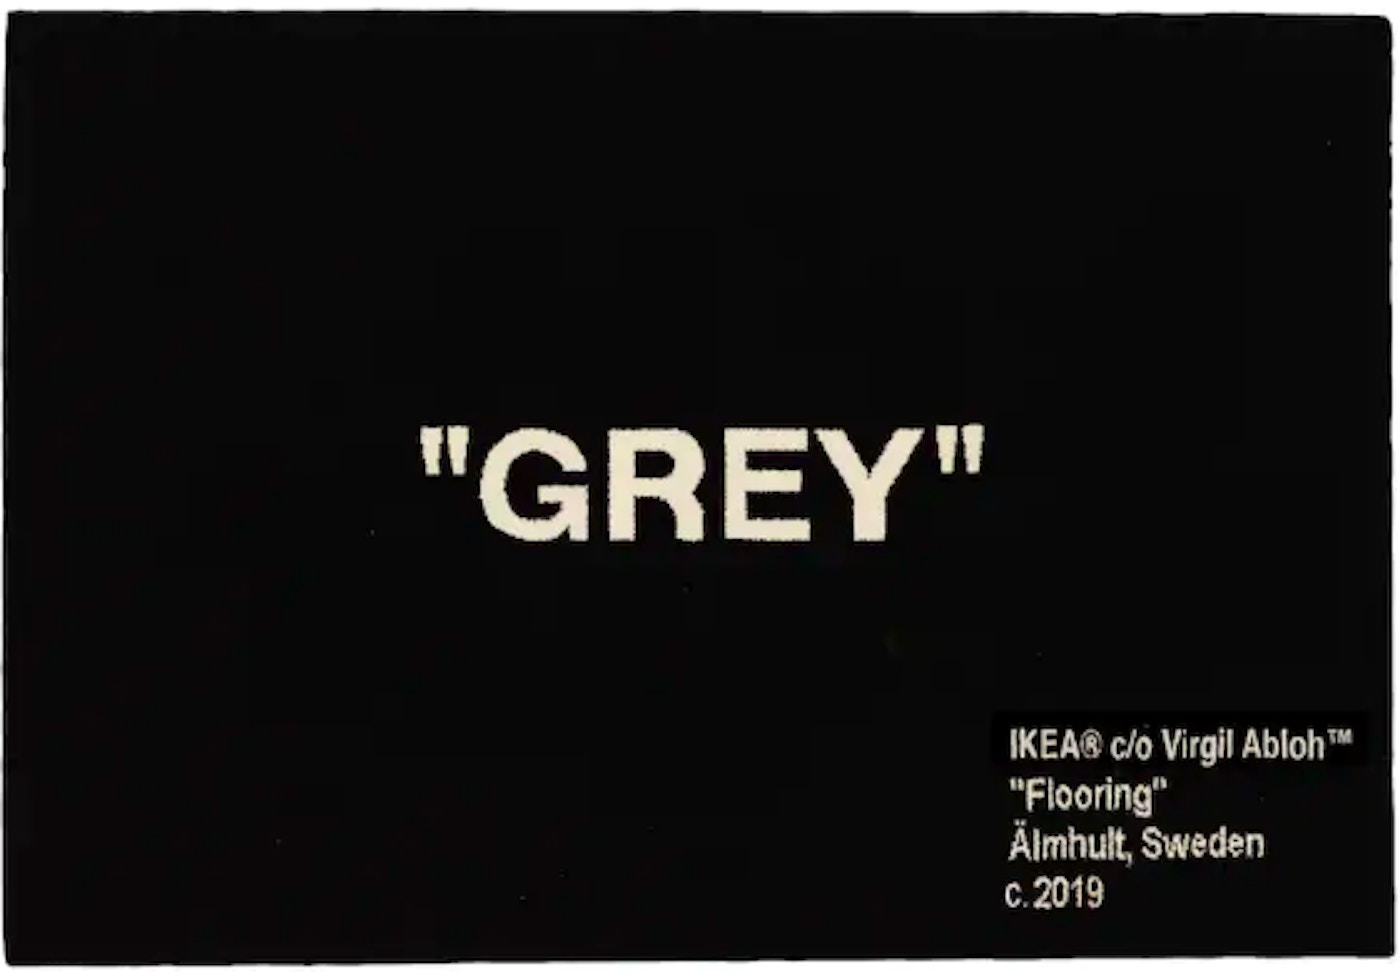 Virgil Abloh x IKEA "GREY" 195x133 CM - FW18